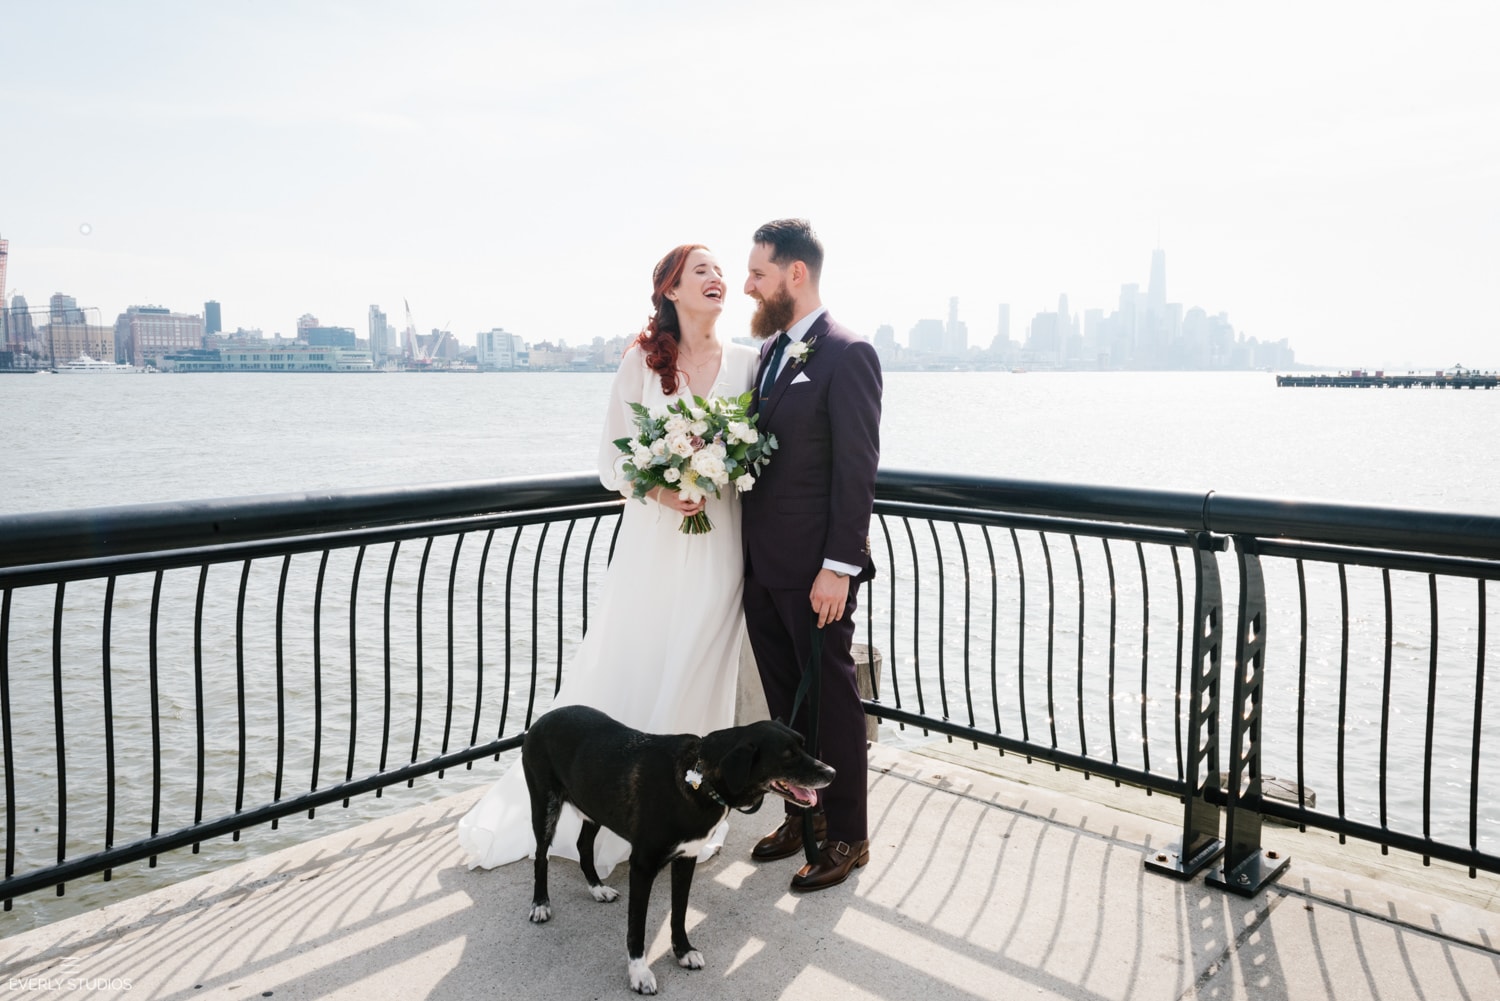 First look at Pier 13 Hoboken wedding. Photos by NYC elopement photographer Everly Studios, www.everlystudios.com